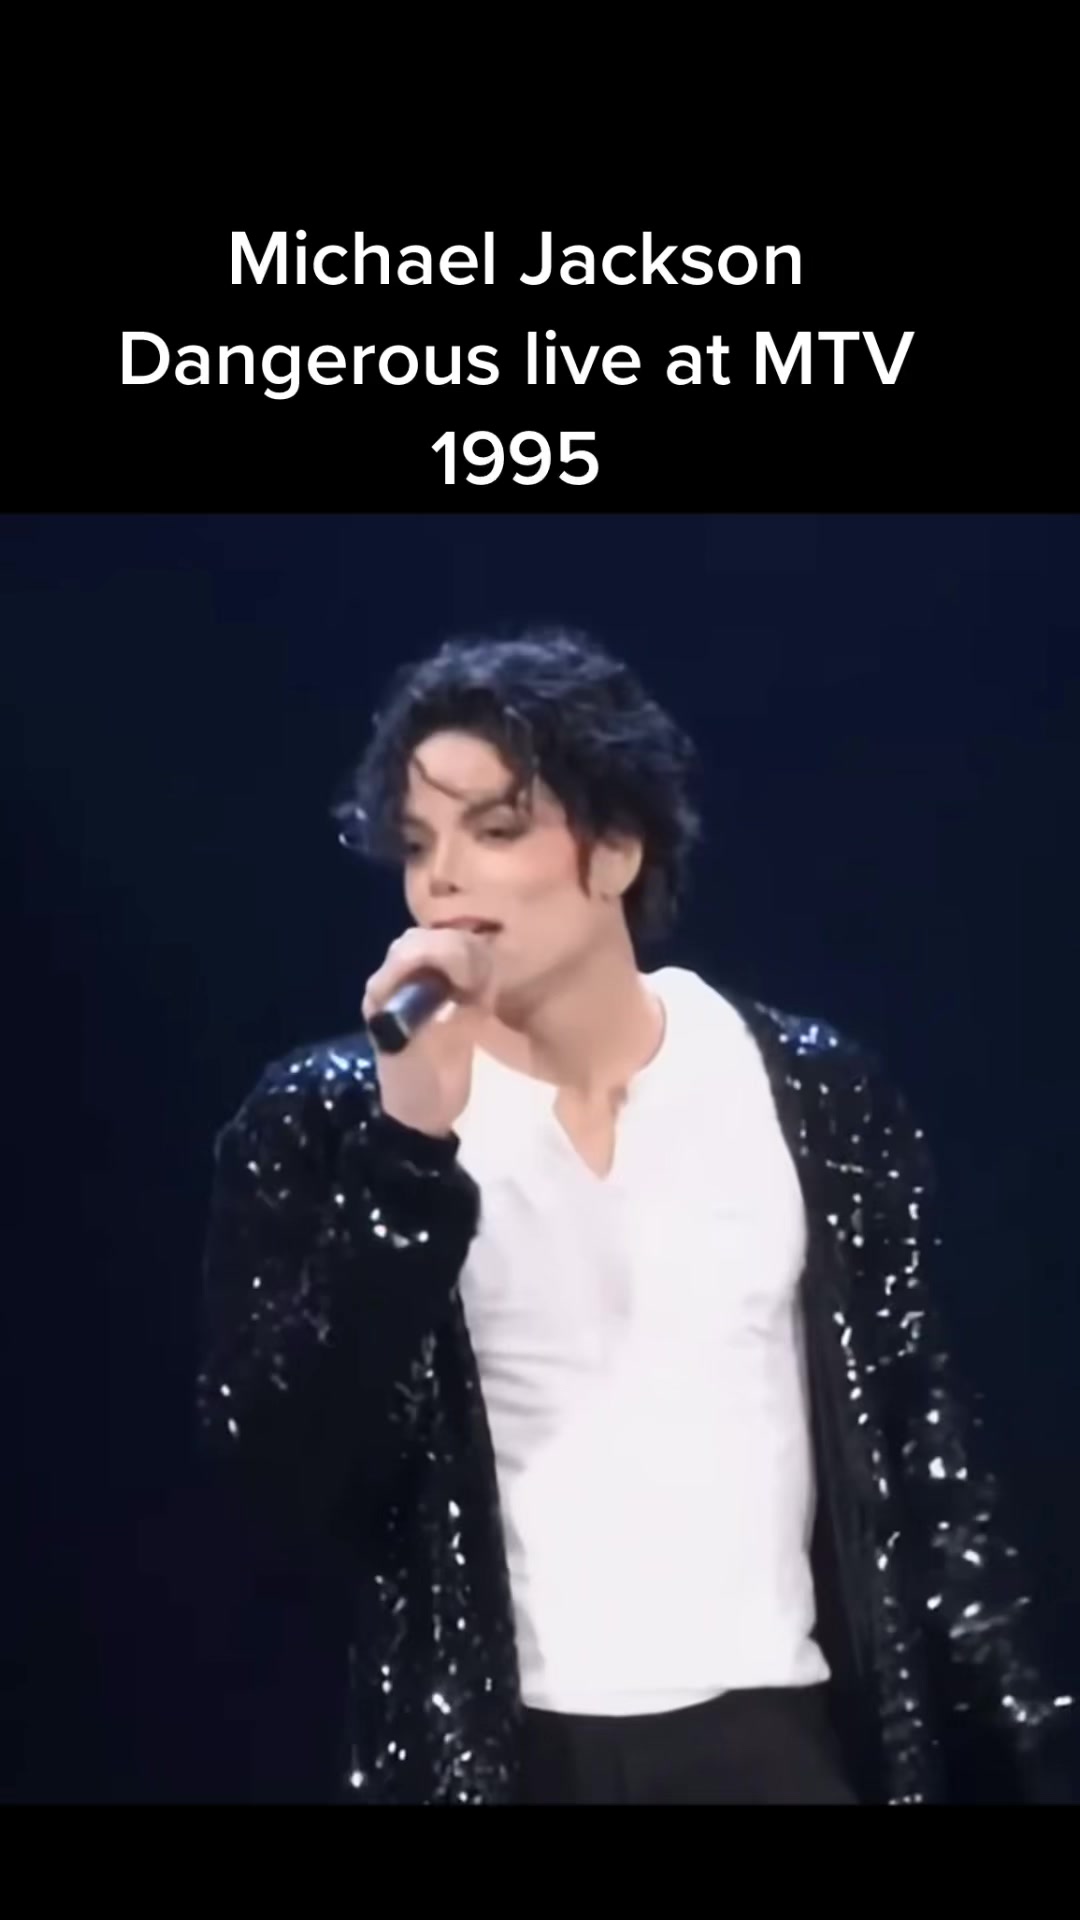 @Michael Jackson